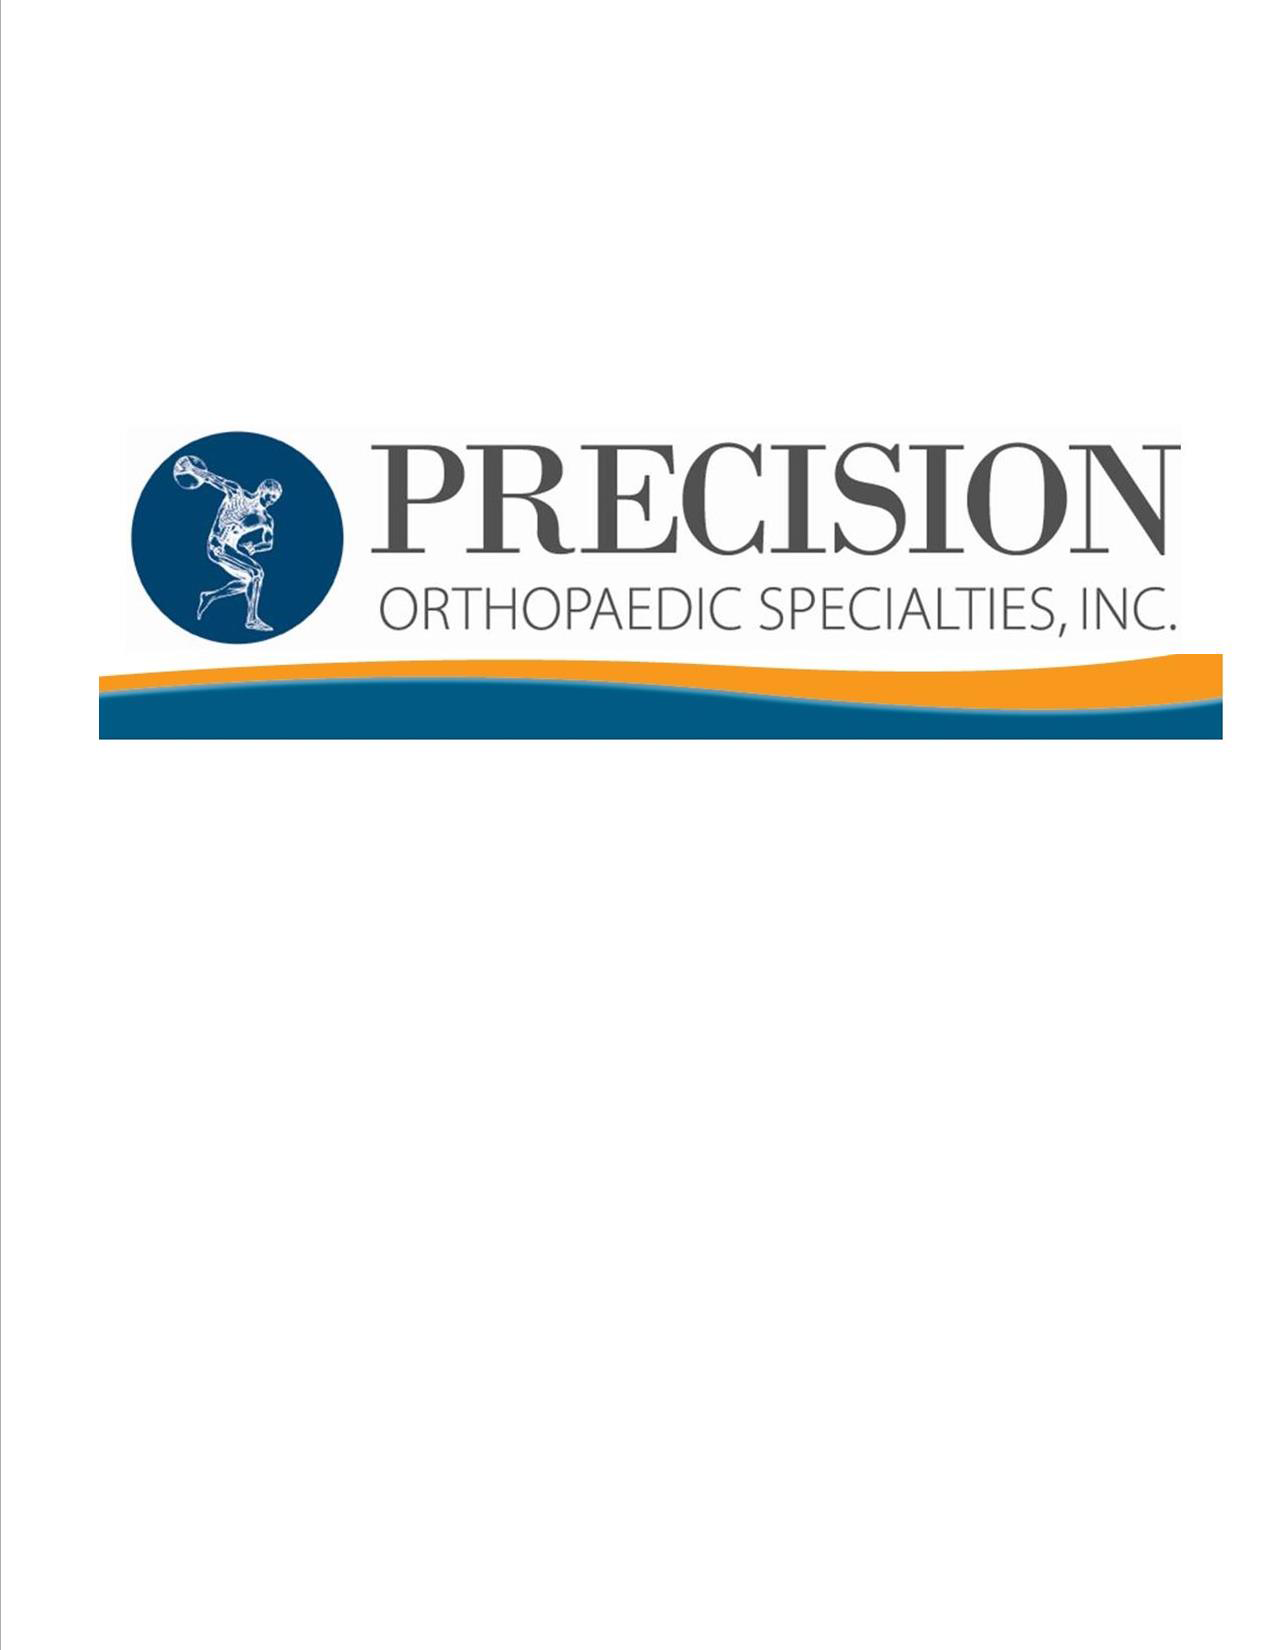 Precision Orthopaedic Specialties logo